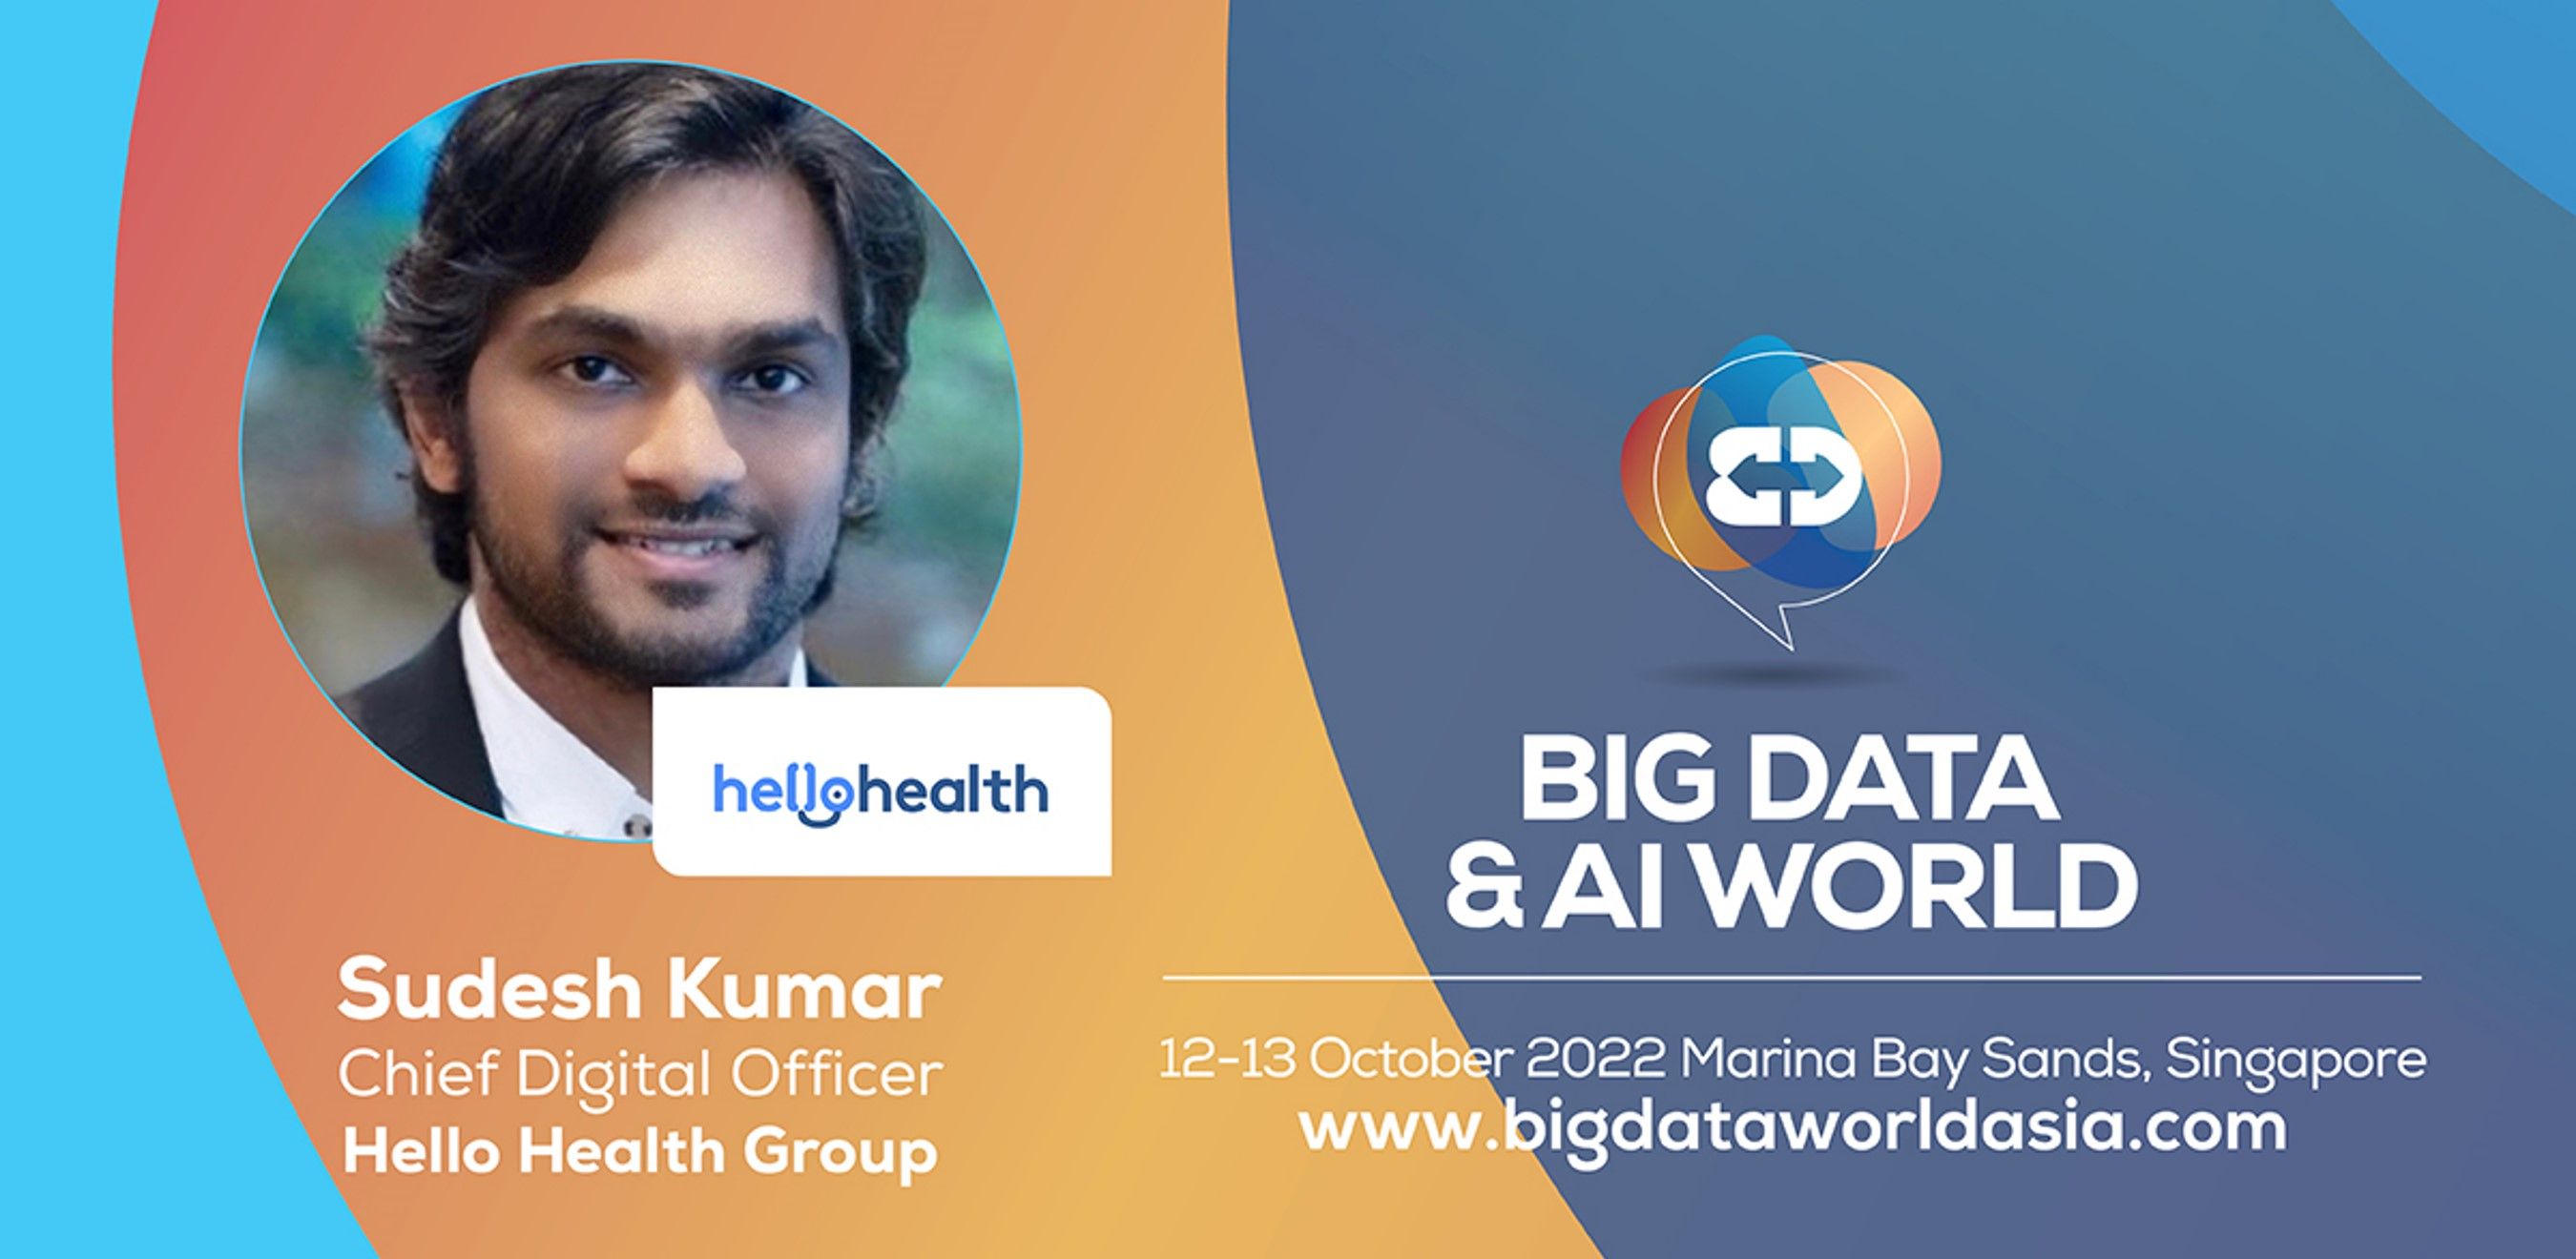 Big Data & AI World 2022: Predictive Analytics In The Digital Healthcare Ecosystem with Hello Health's Sudesh Kumar